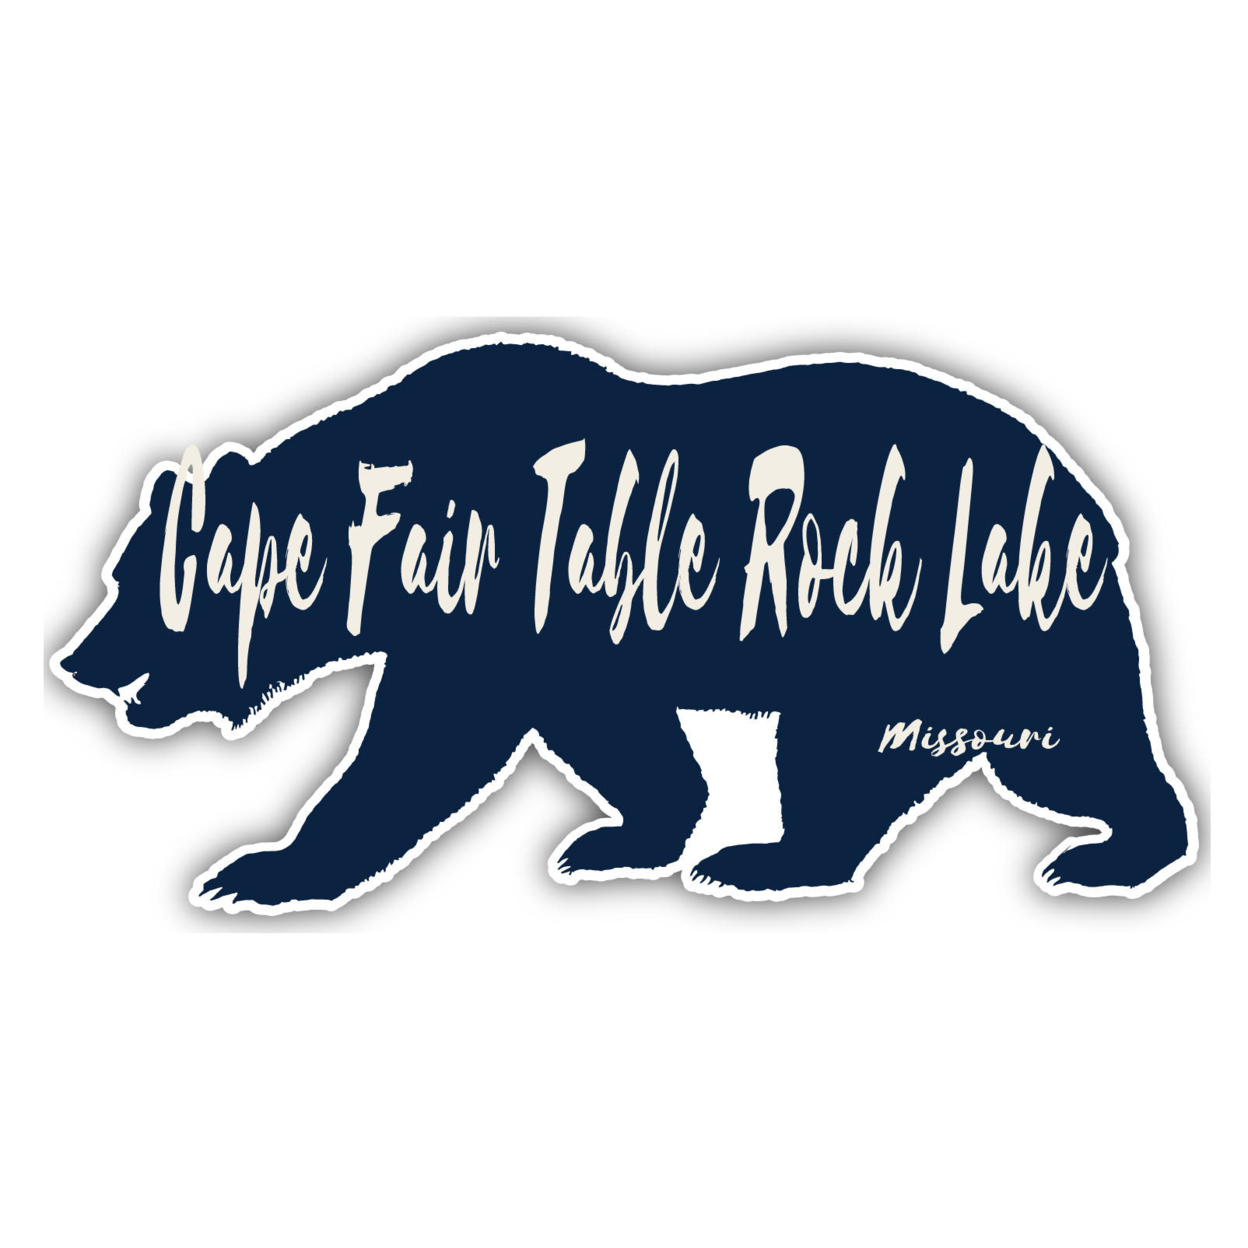 Cape Fair Table Rock Lake Missouri Souvenir Decorative Stickers (Choose Theme And Size) - Single Unit, 8-Inch, Bear